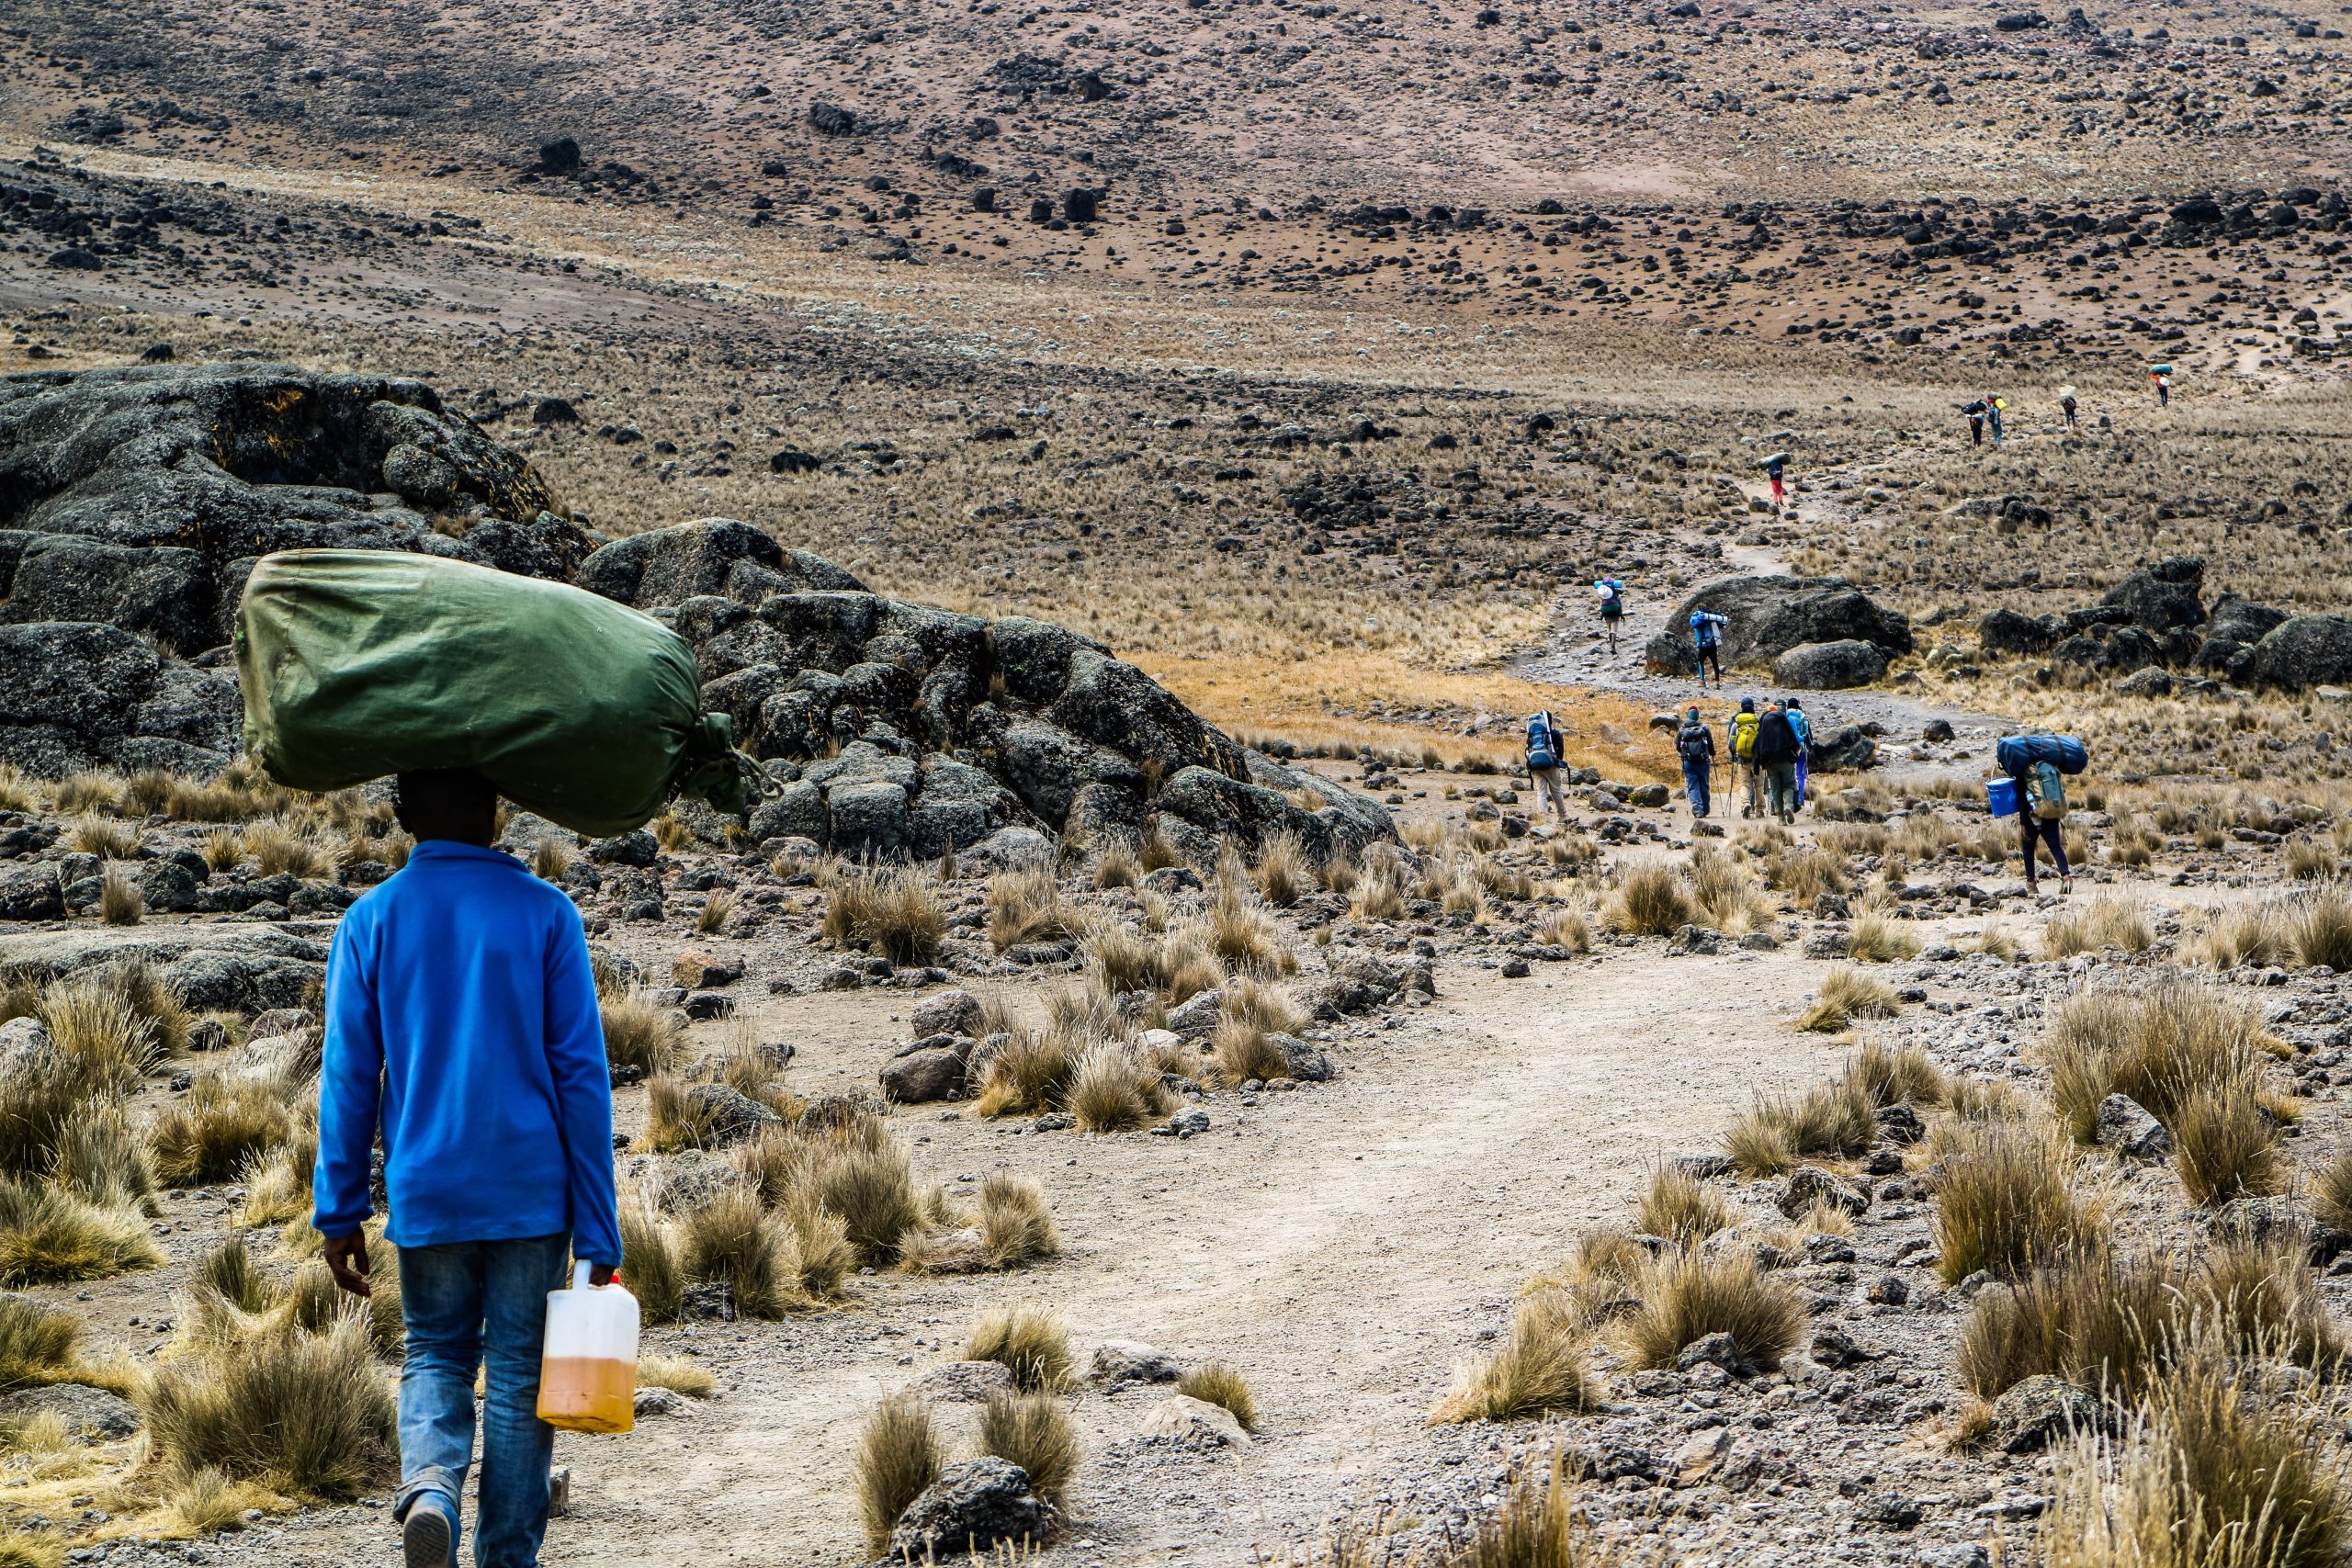 Several travellers climb the path up Mount Kilimanjaro.